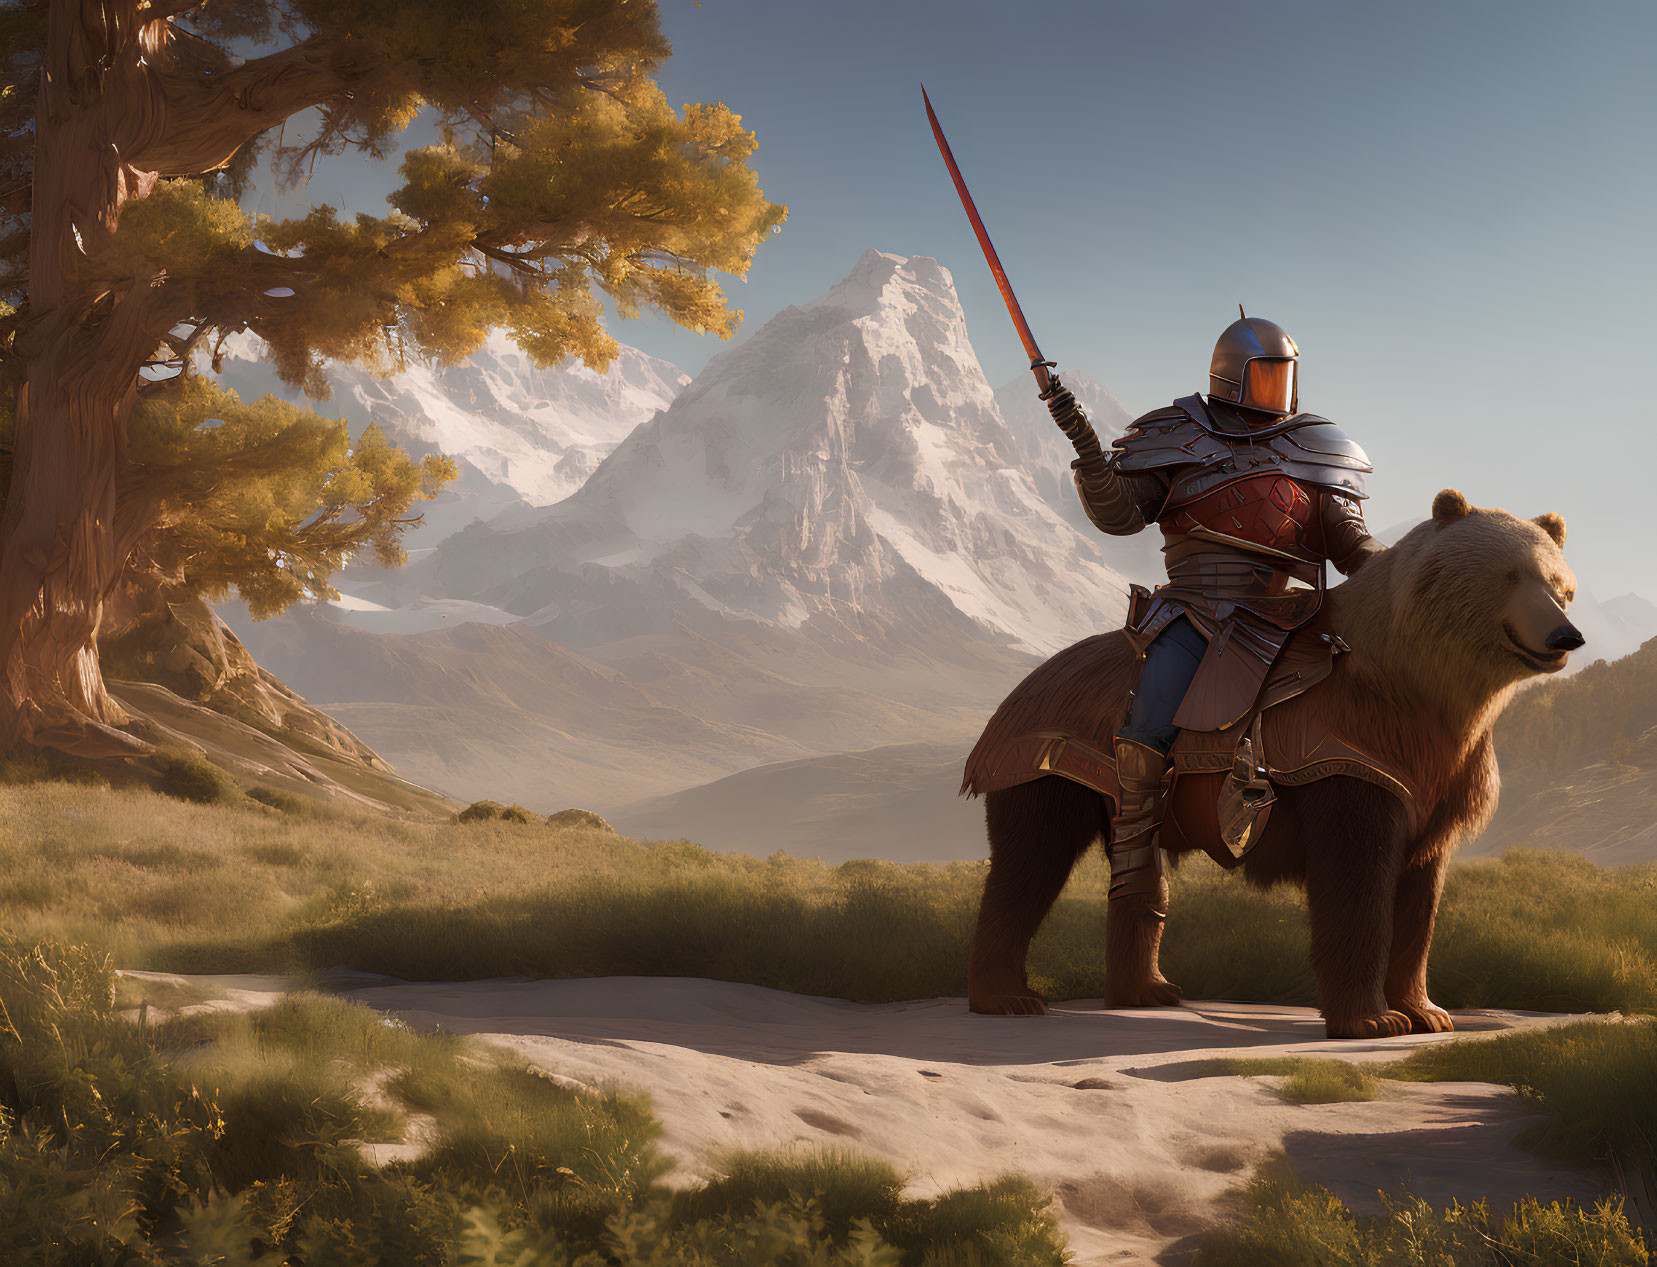 Knight in full armor riding bear in serene landscape